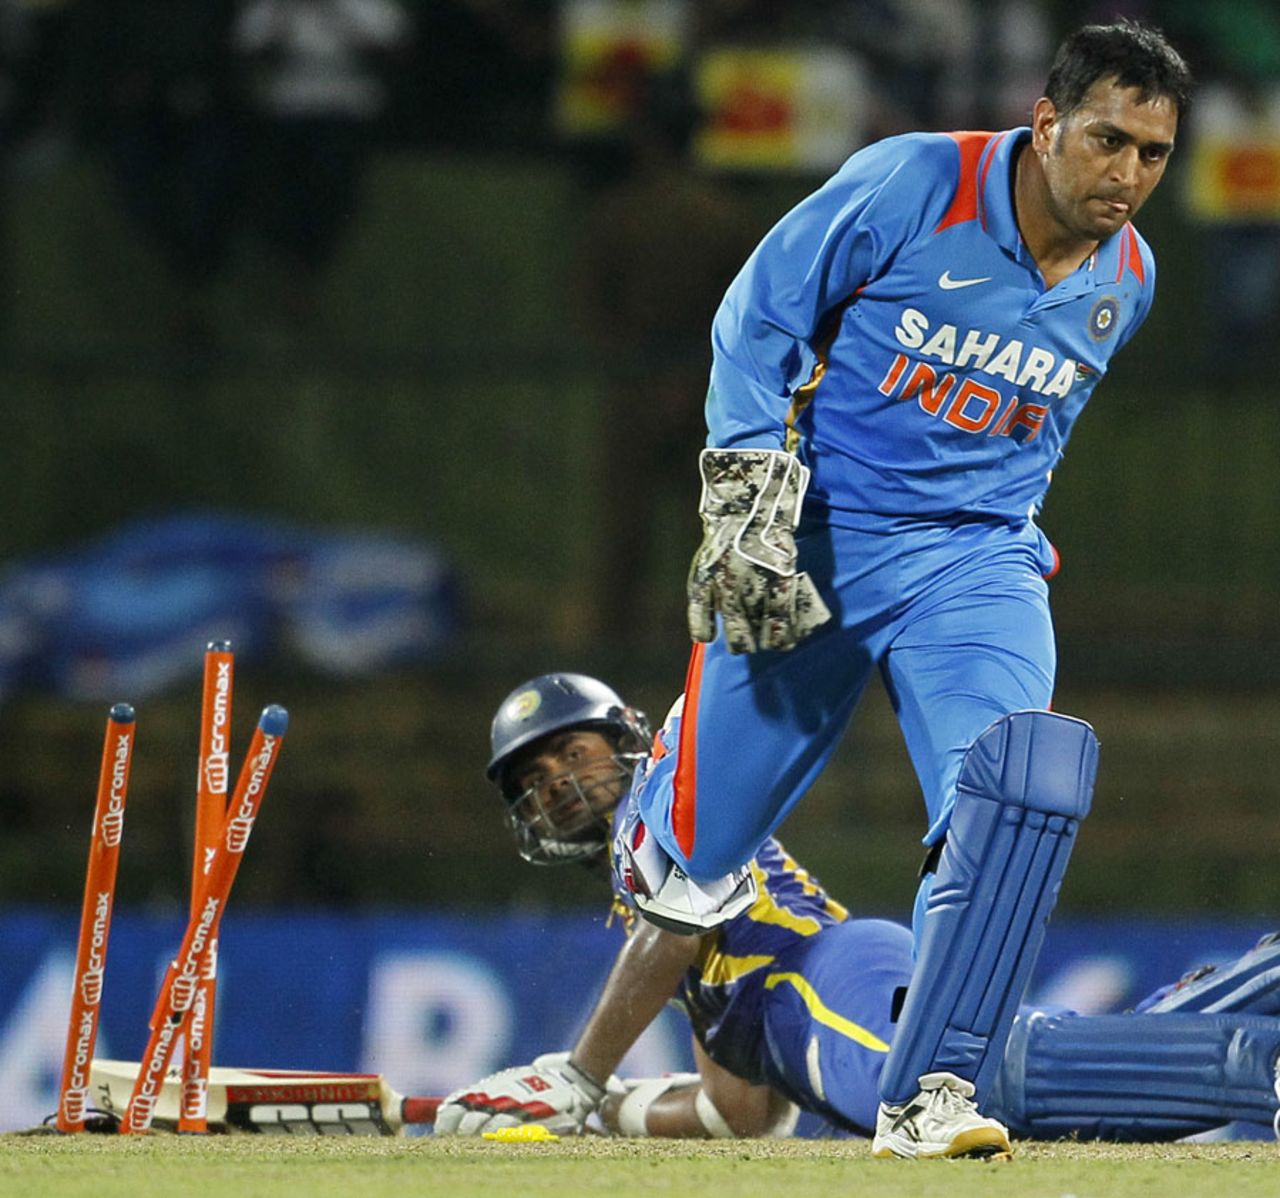 MS Dhoni completes the run out of Lahiru Thirimanne, Sri Lanka v India, 5th ODI, Pallekele, August 4, 2012